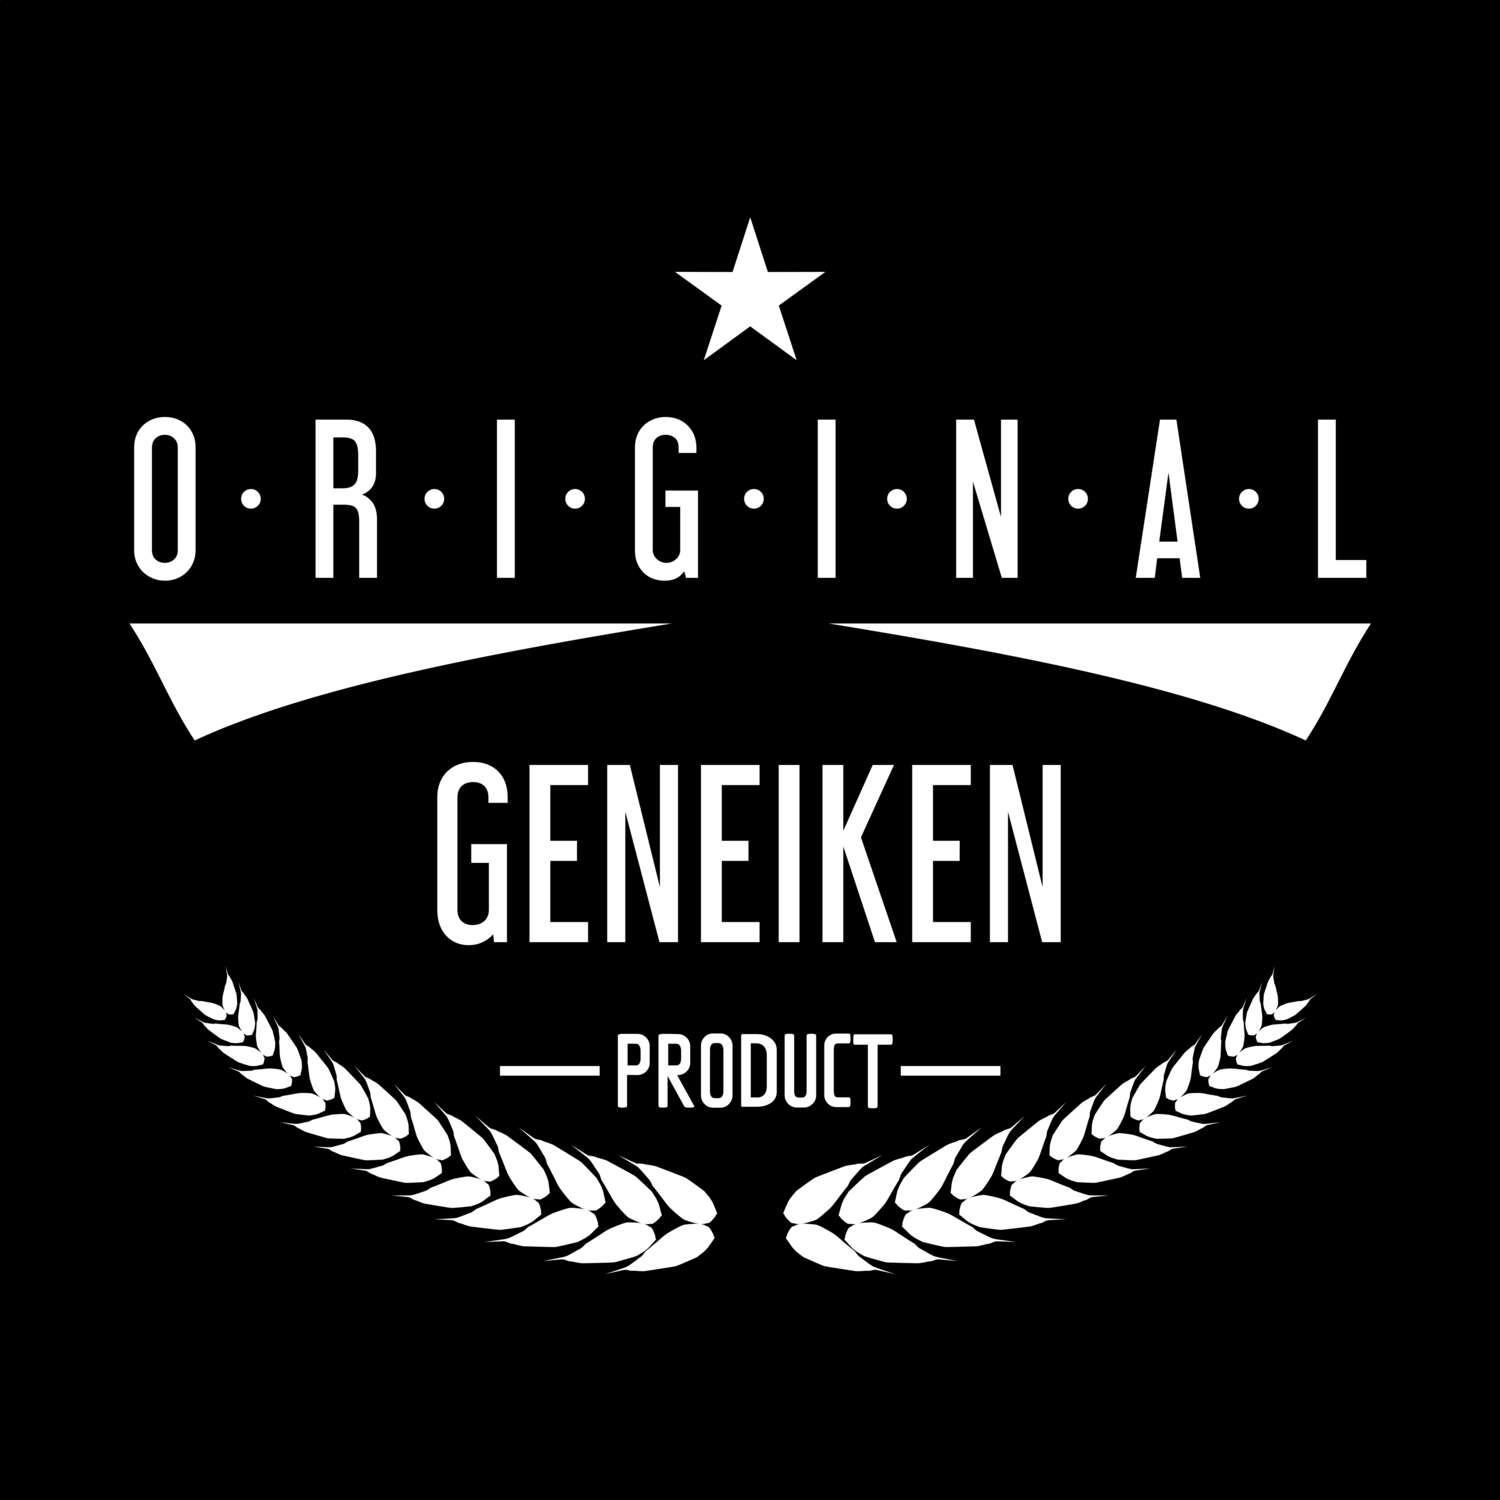 Geneiken T-Shirt »Original Product«